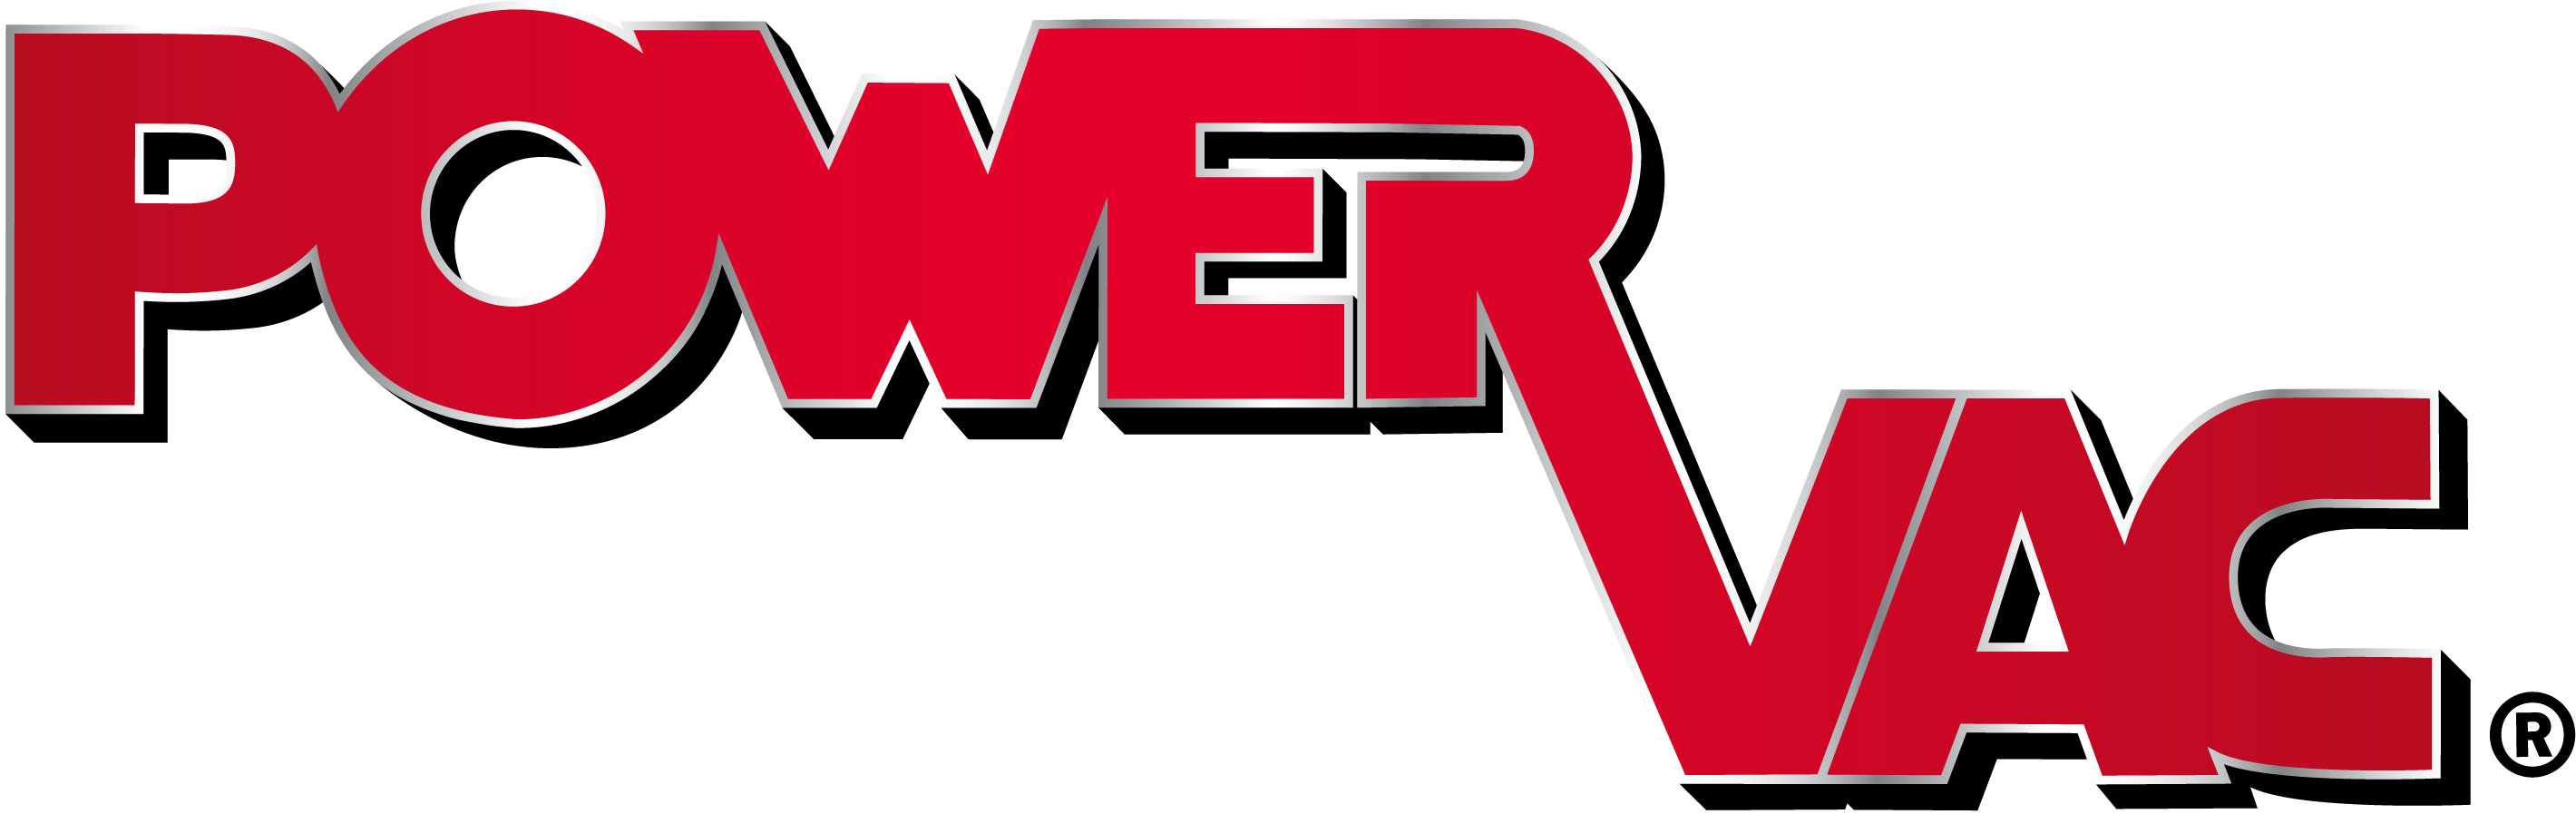 powervac-logo-default.png